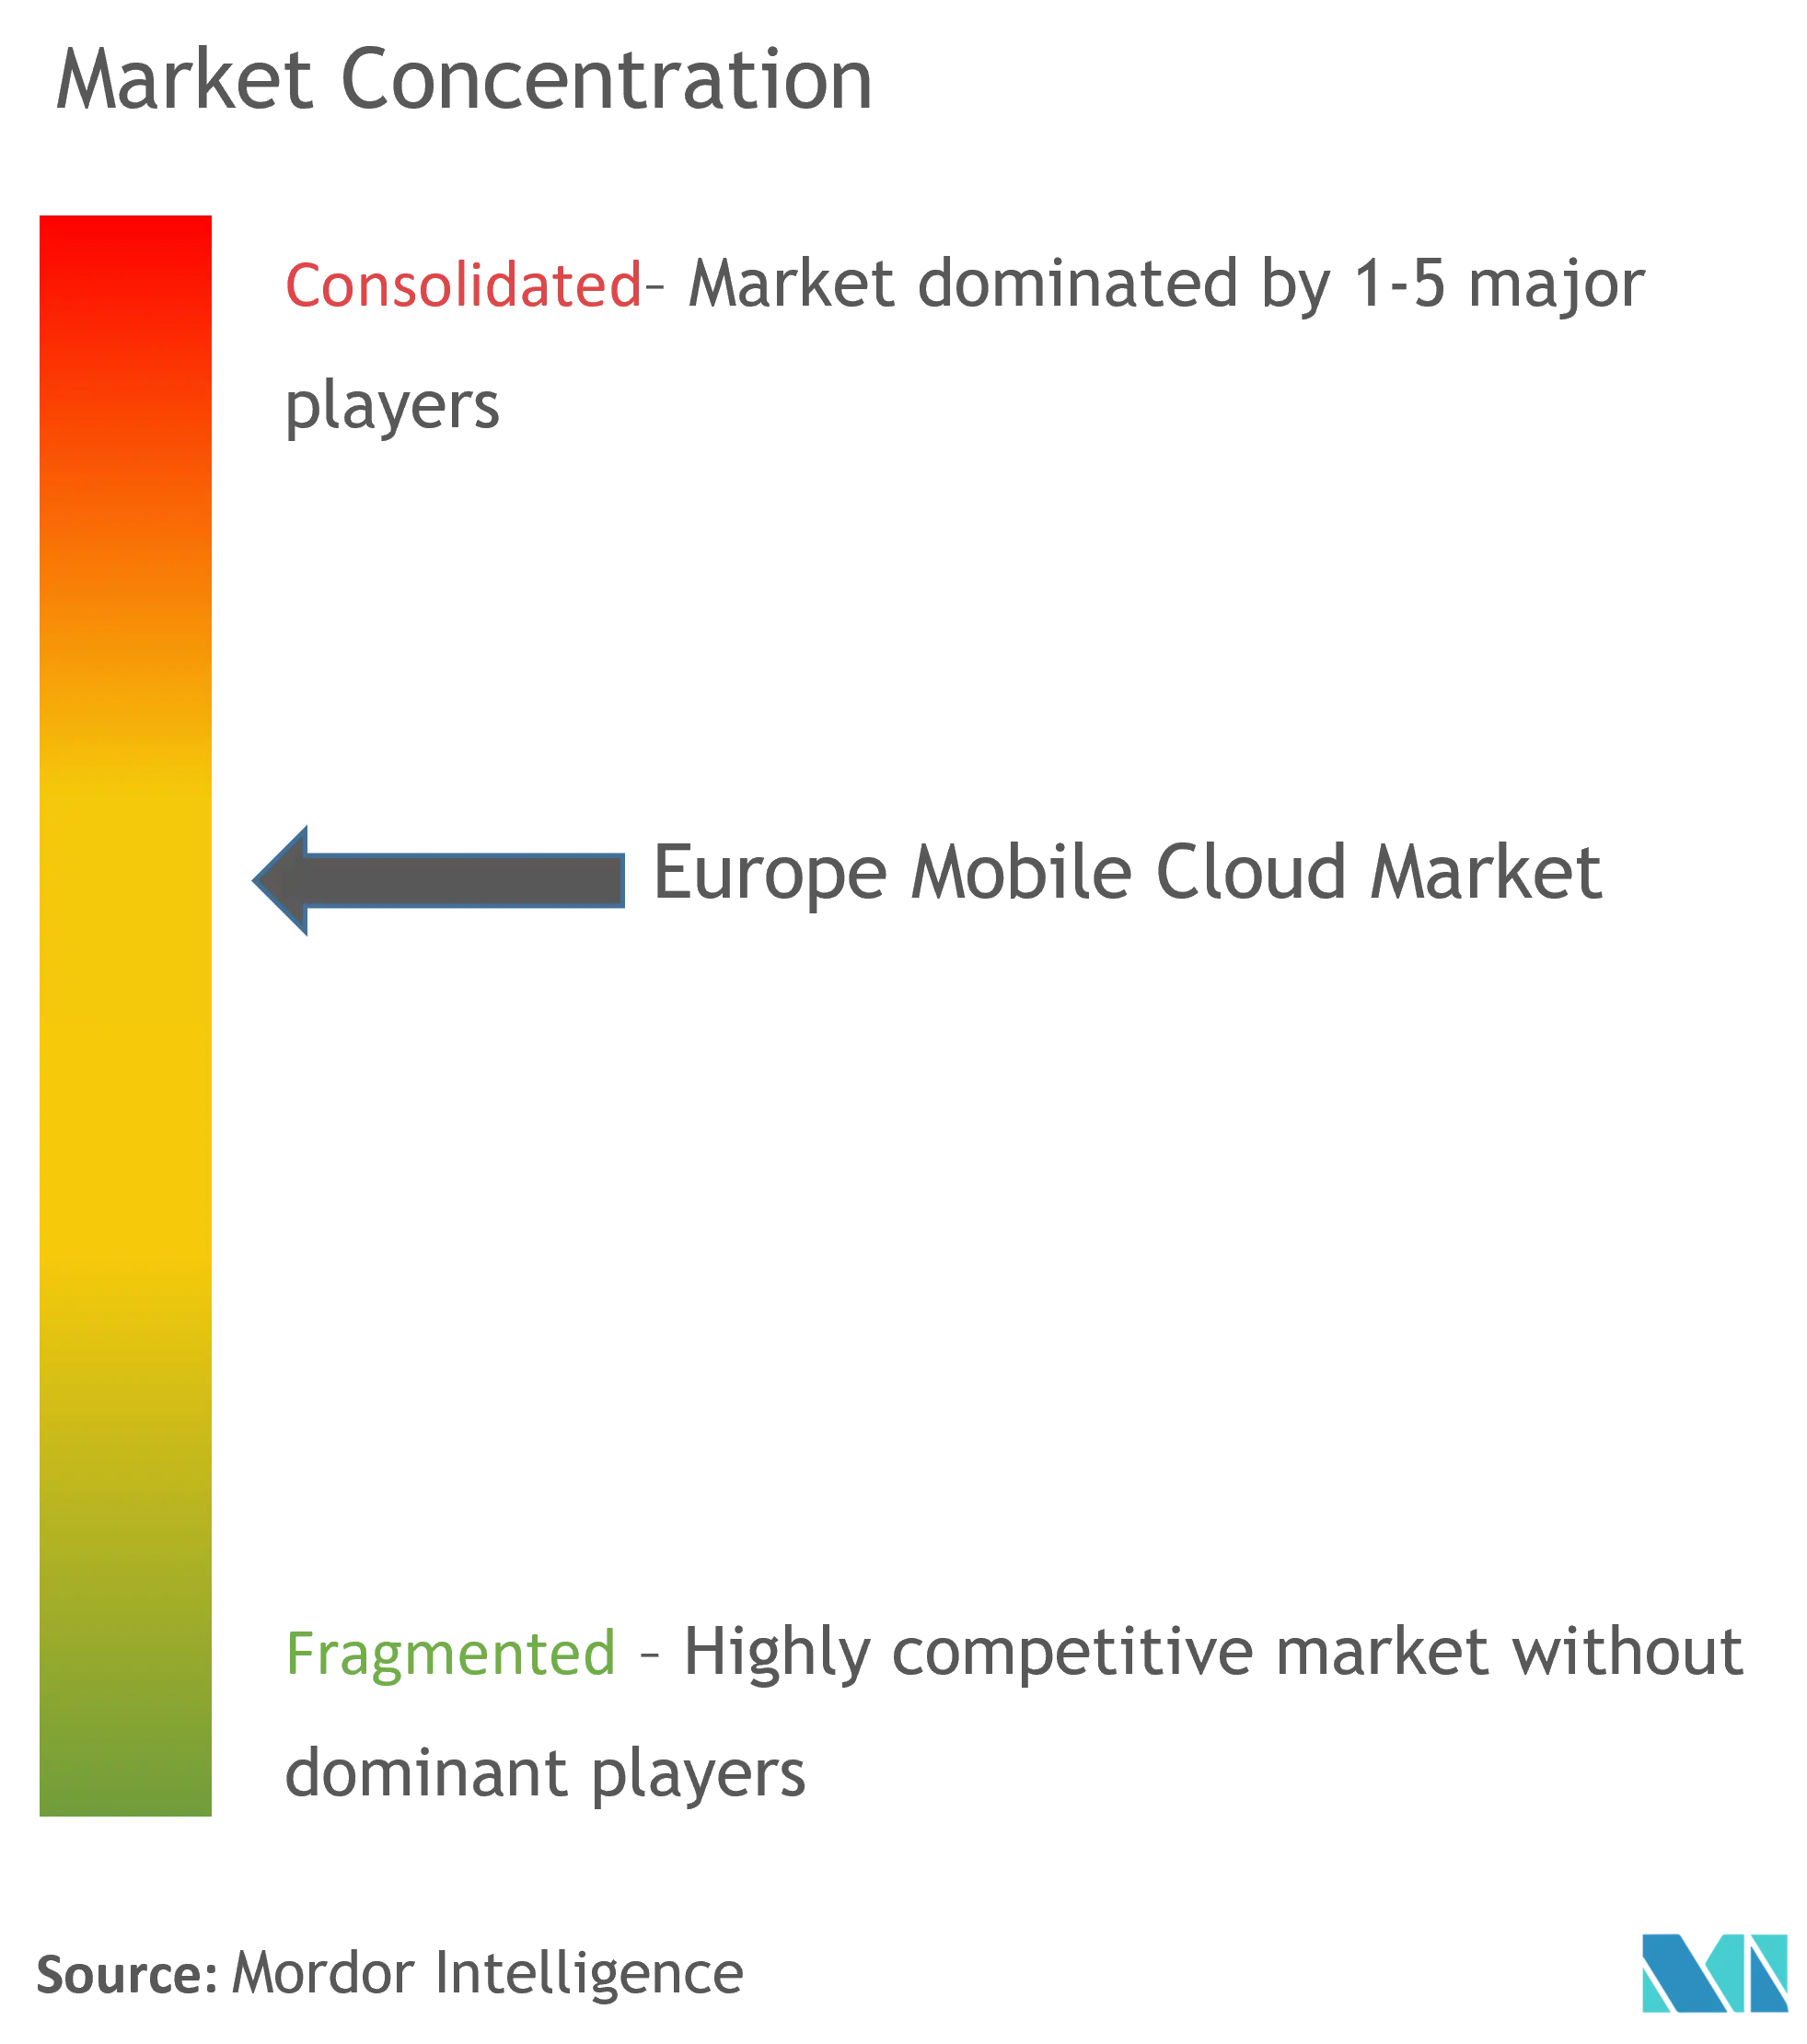 Europe Mobile Cloud Market Concentration